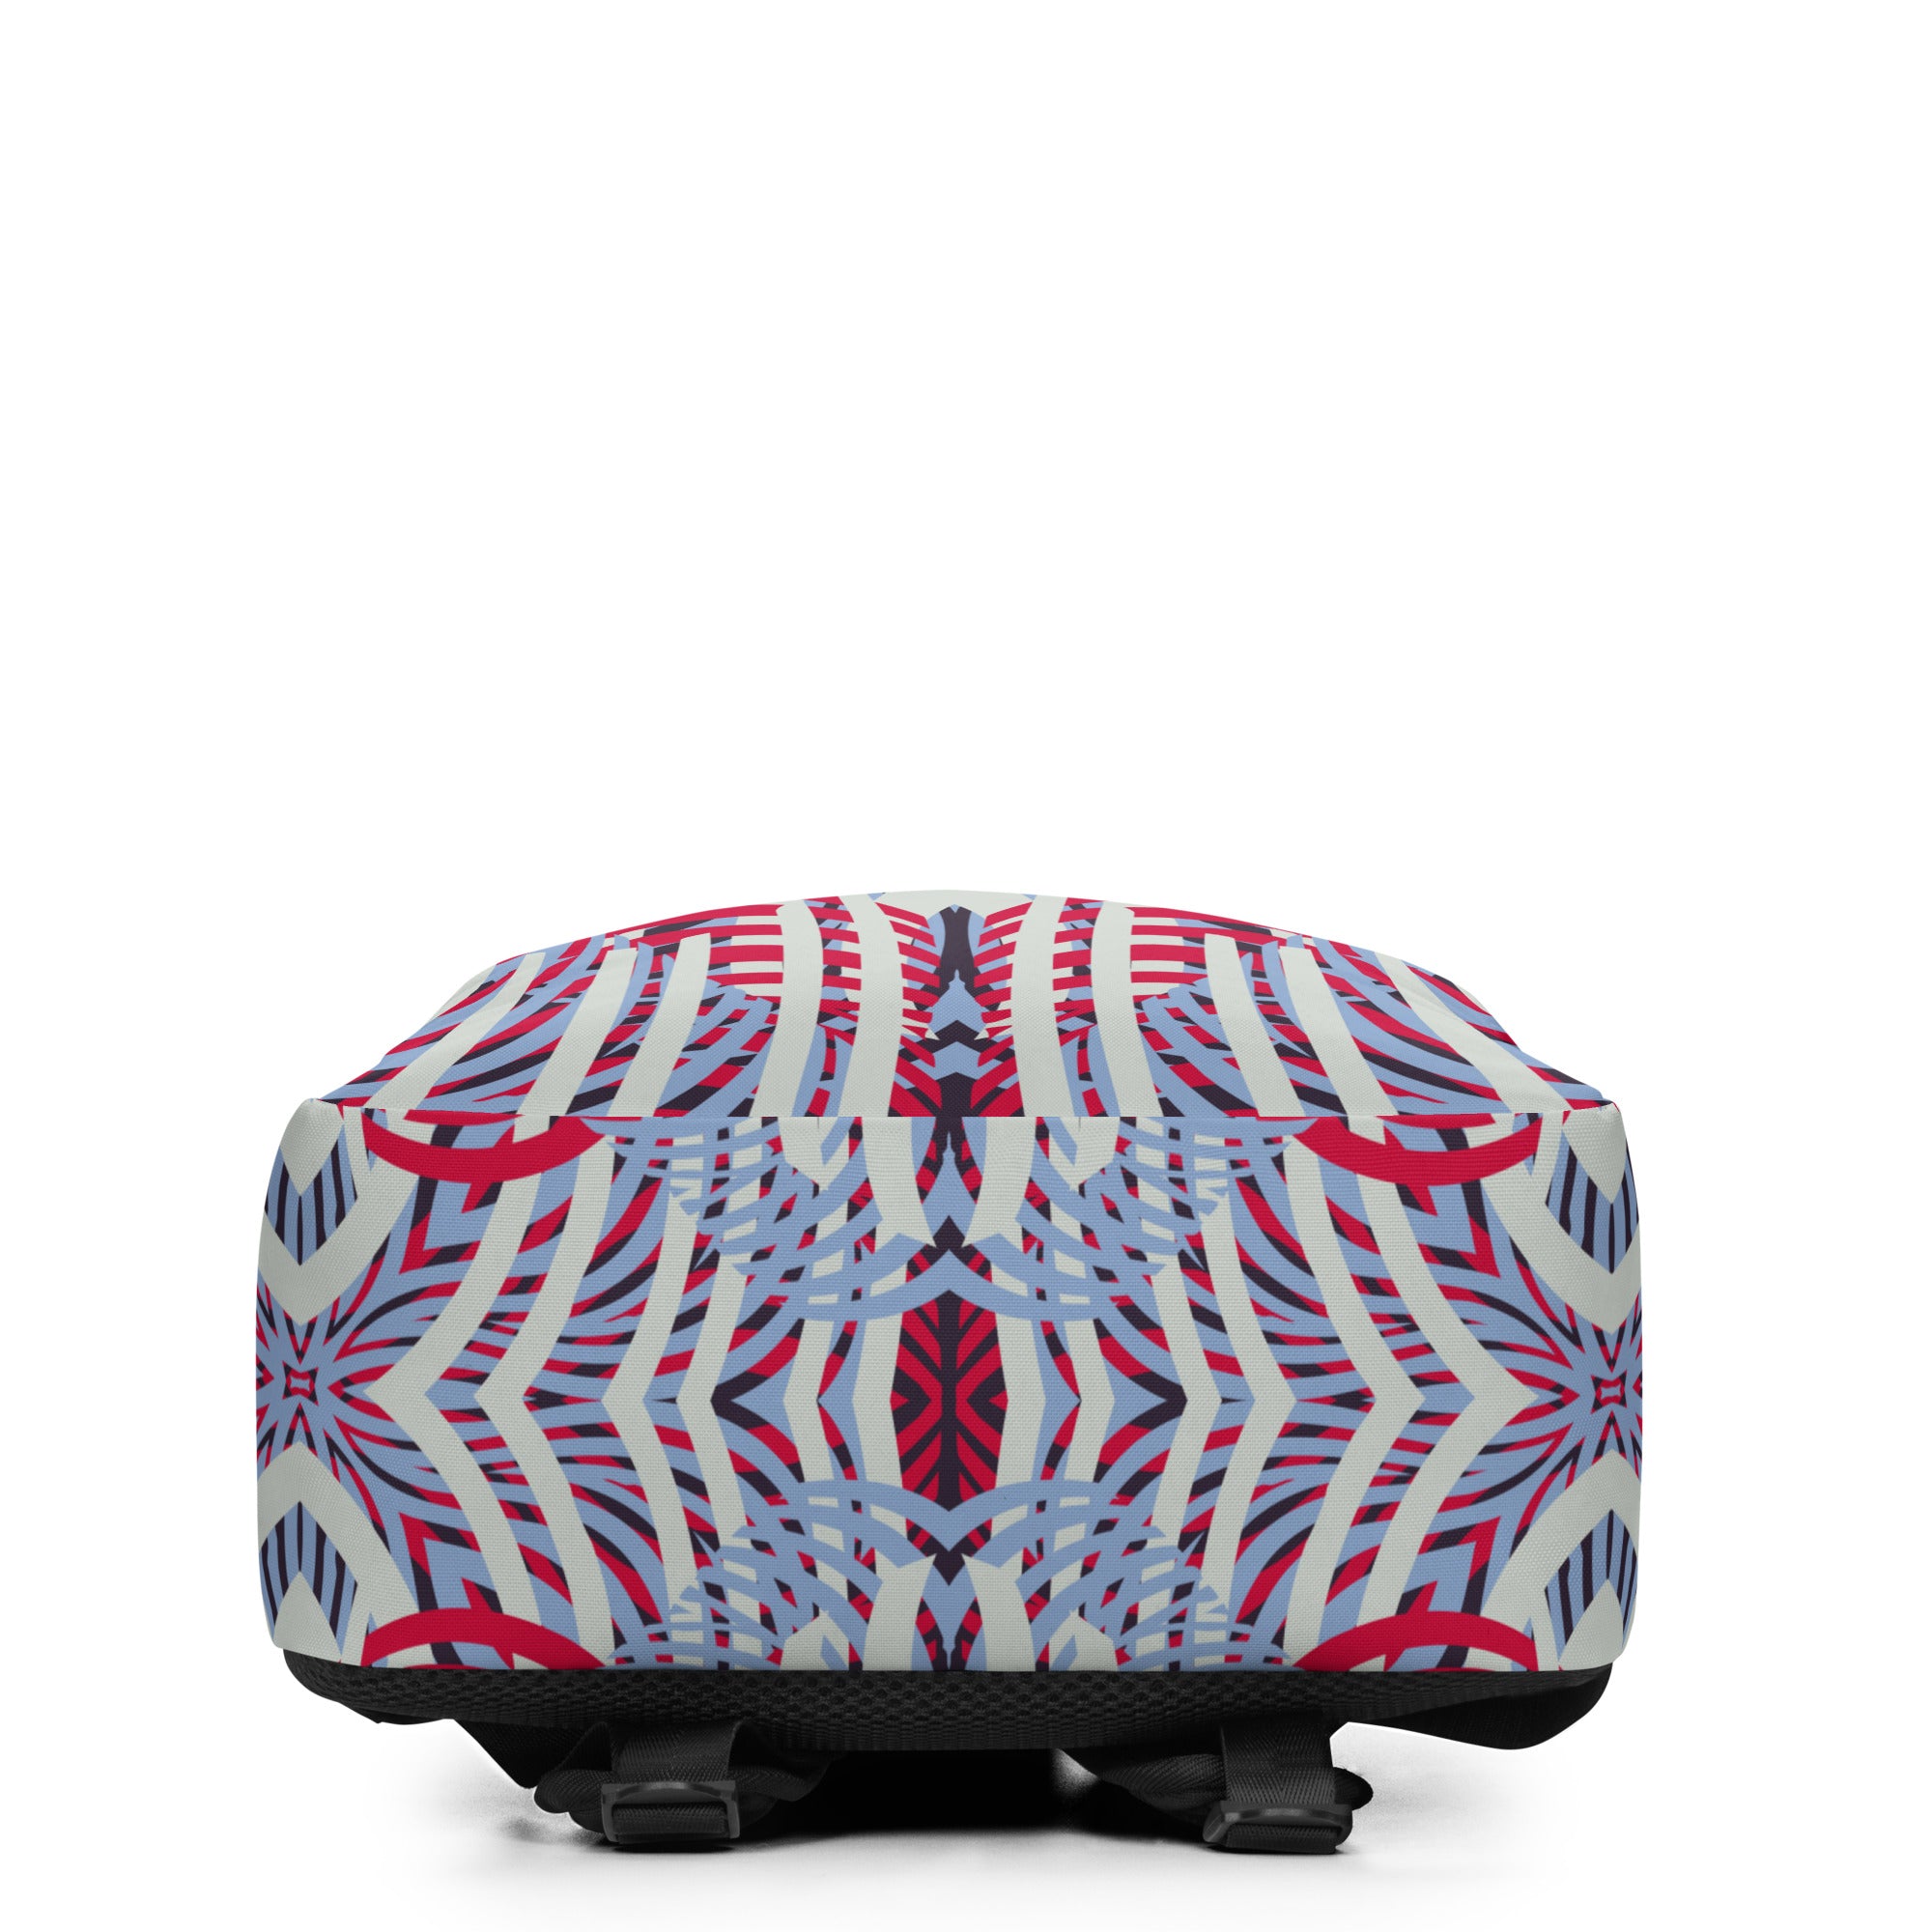 Minimalist Backpack- African Motif Pattern I